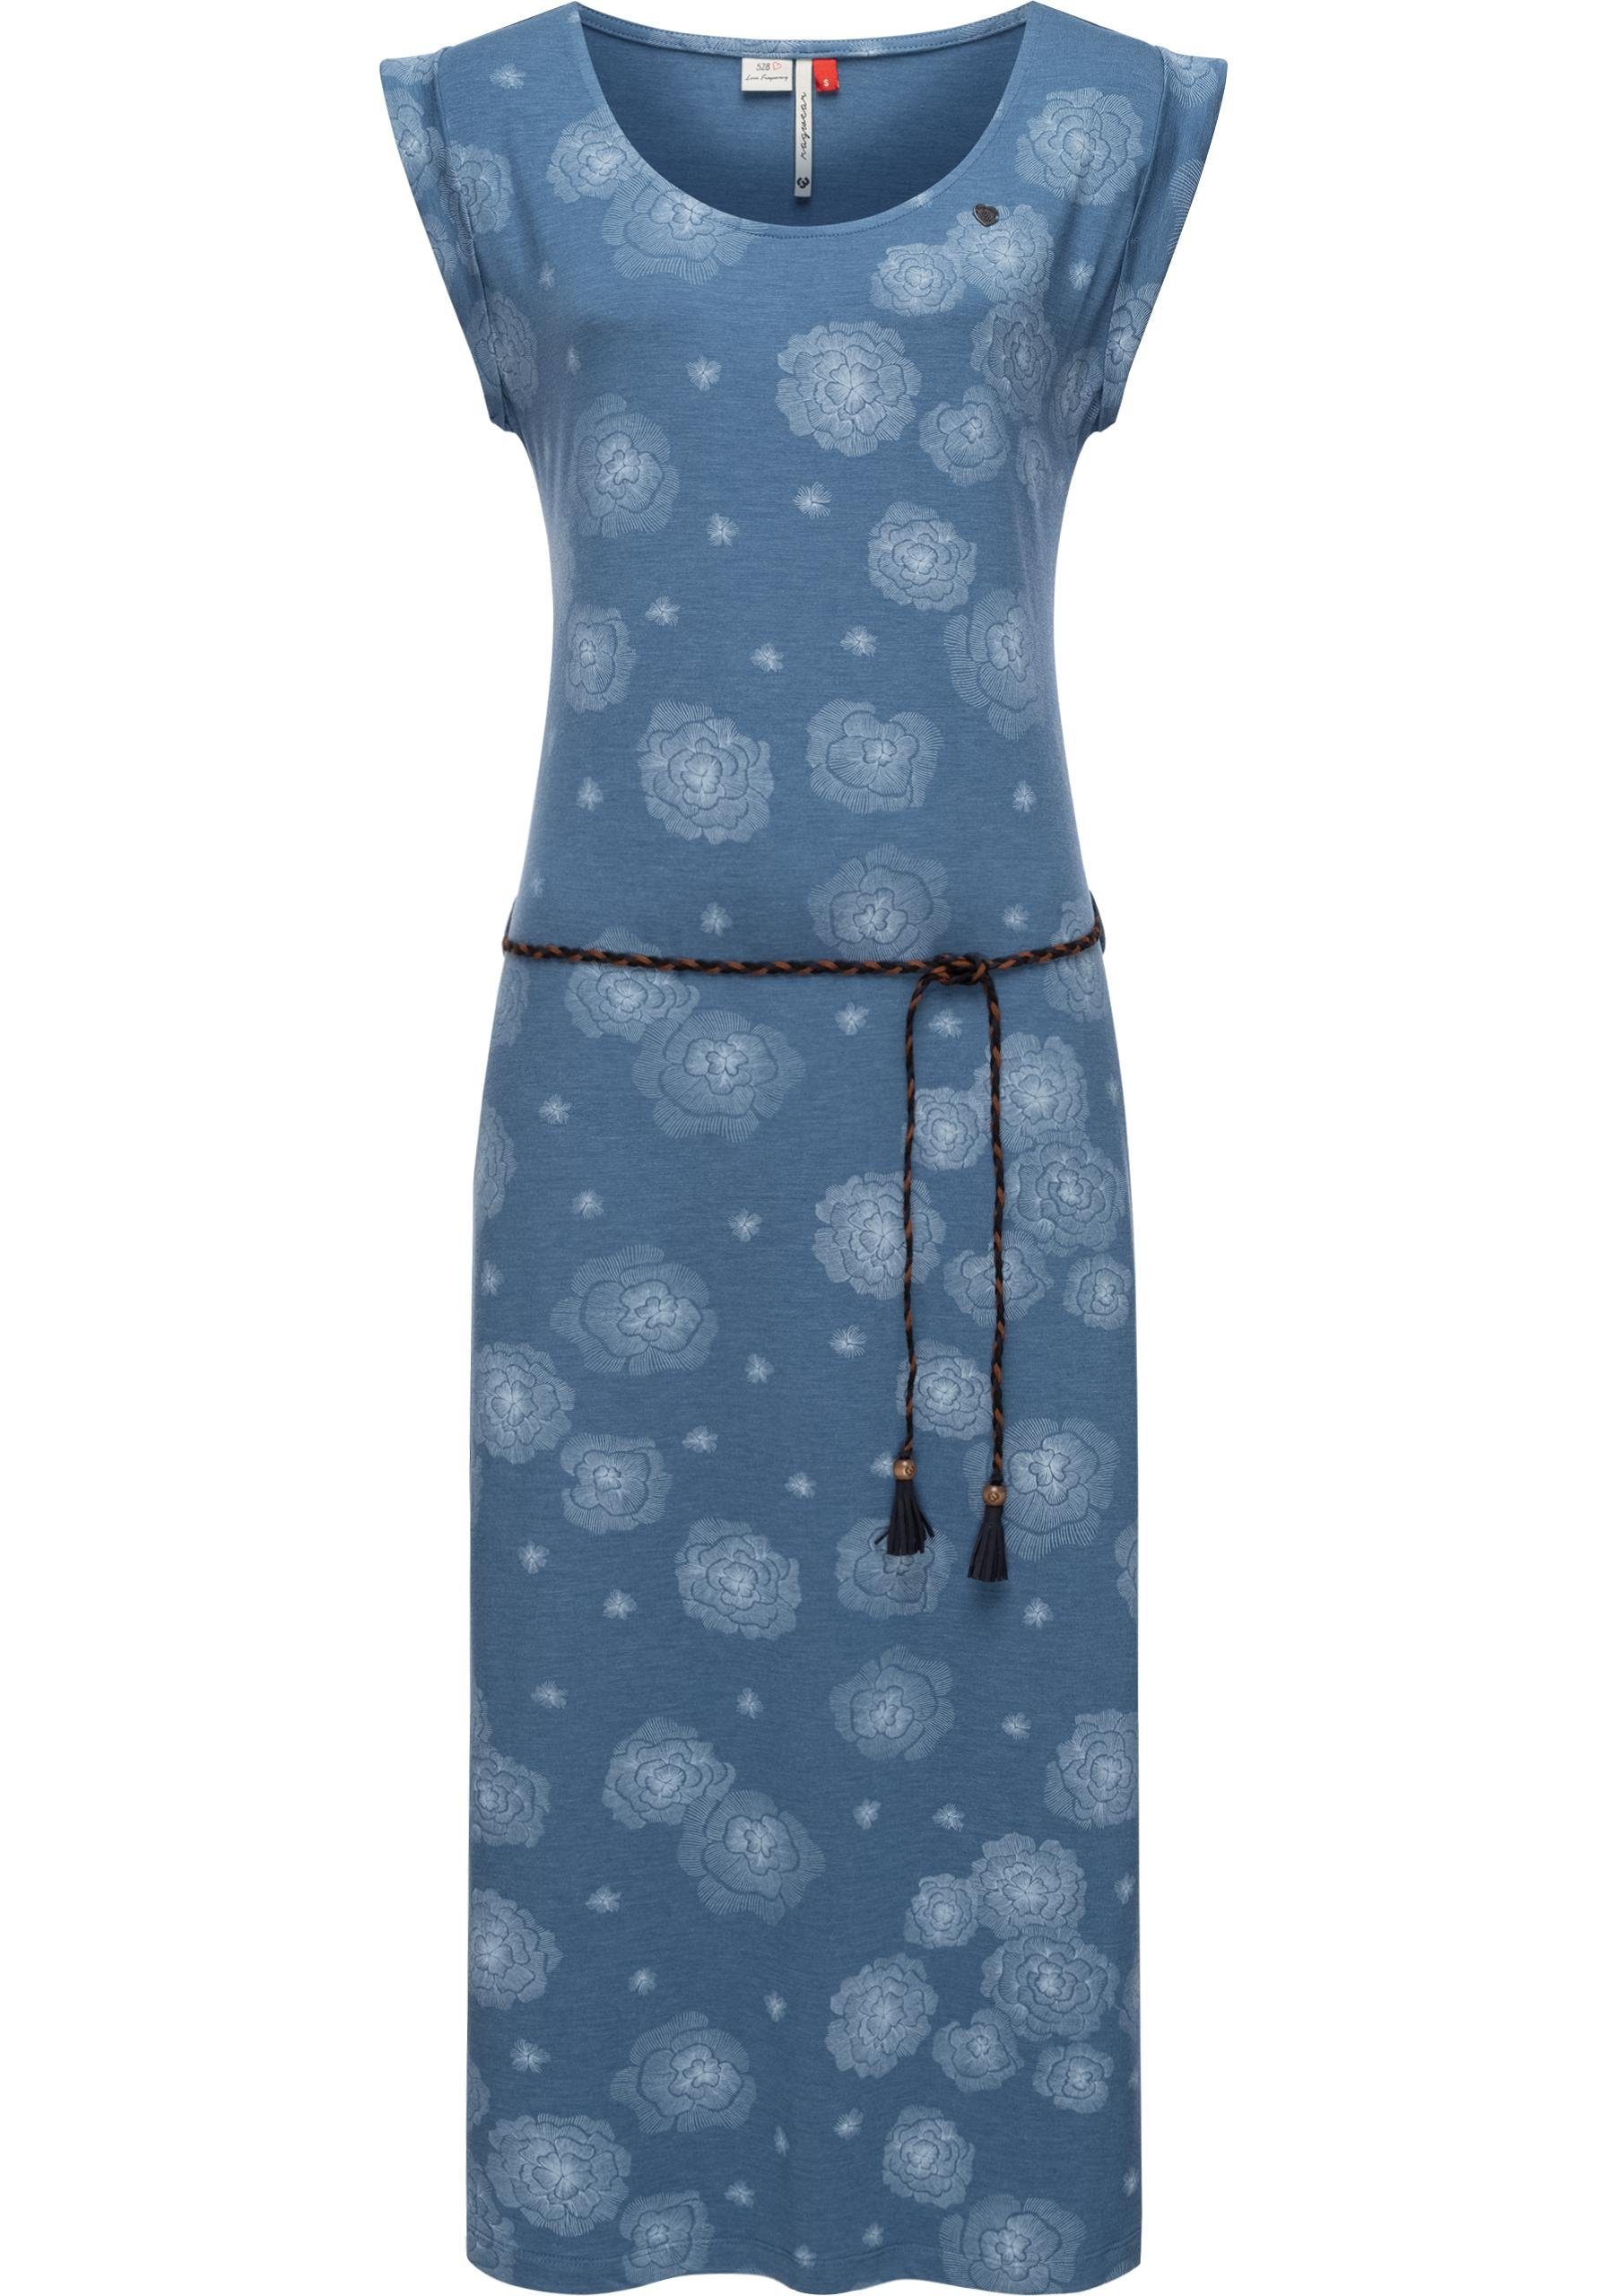 Tag wadenlanges Ragwear Allover-Print mit indigo Midi Sommerkleid Maxikleid